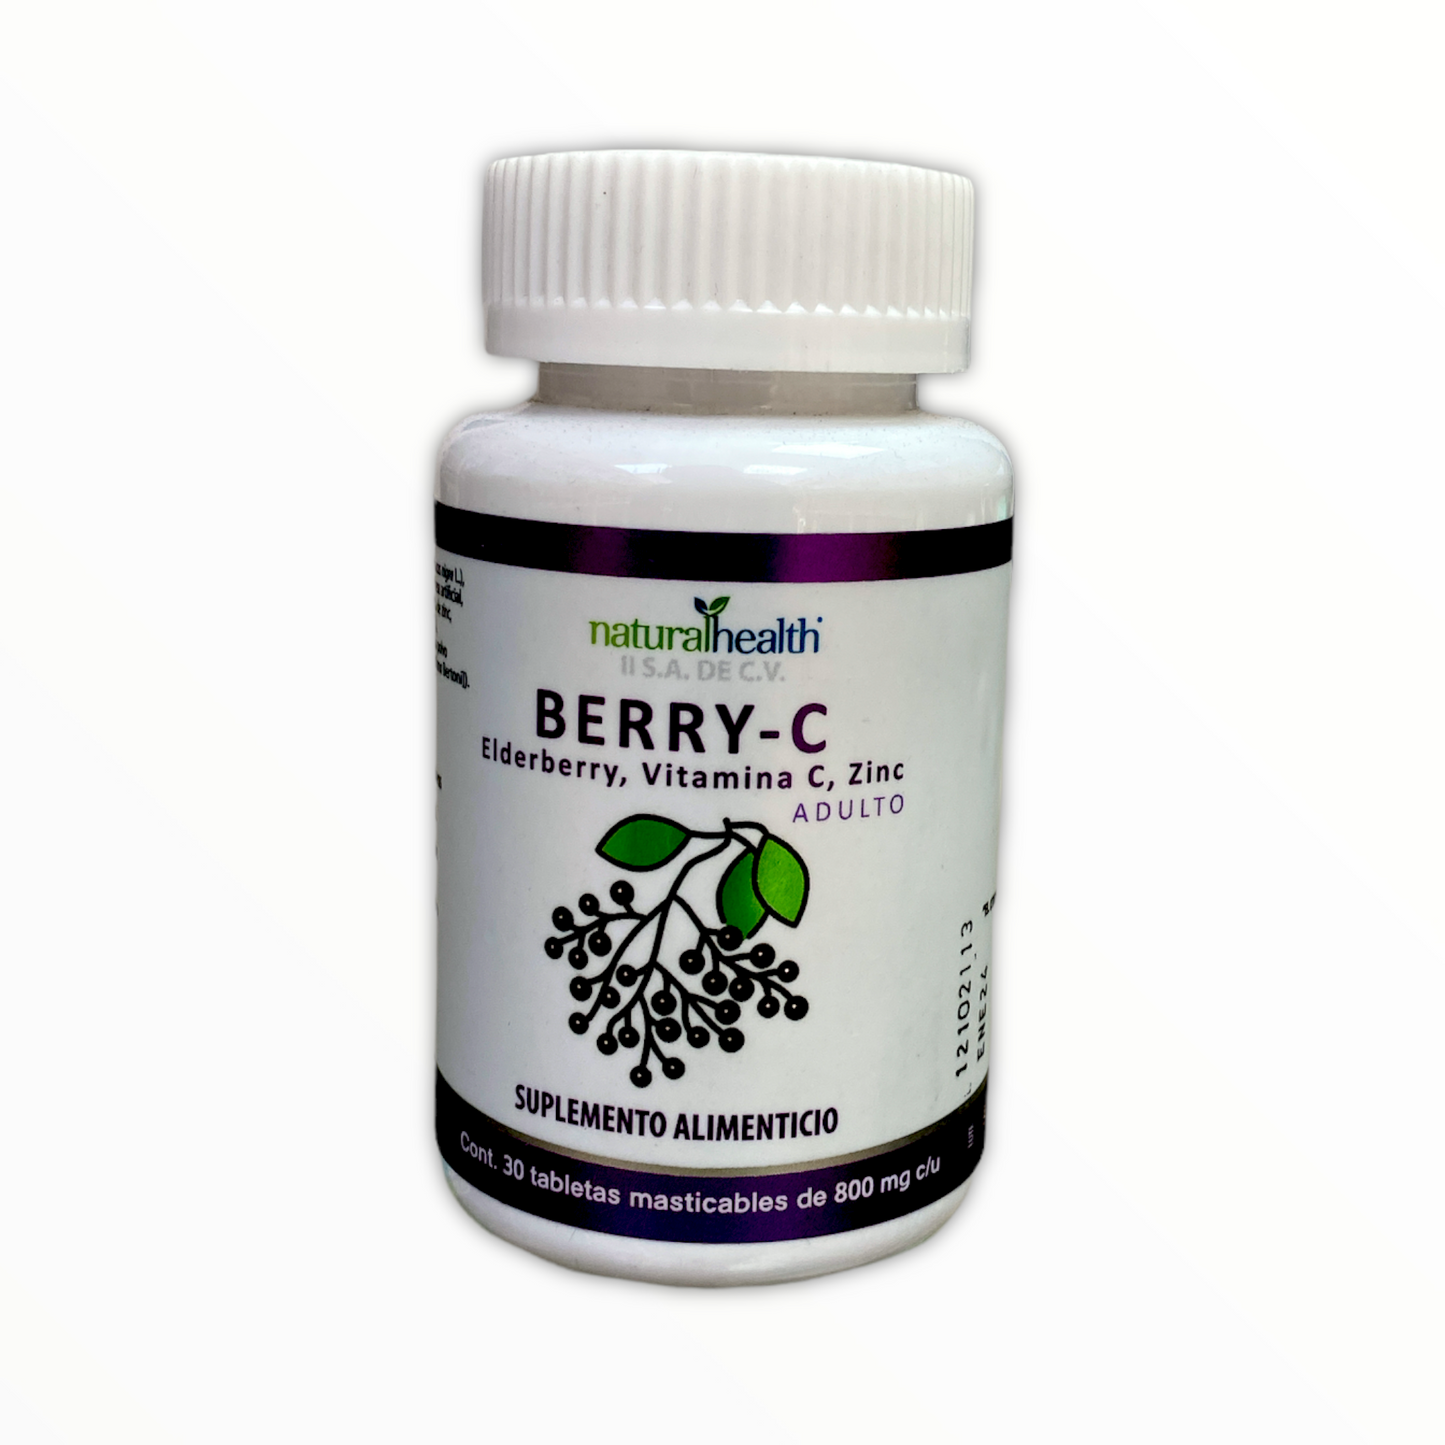 berry-c elderberry vitamina c y zinc 30 tabletas masticables 800 mg natural health